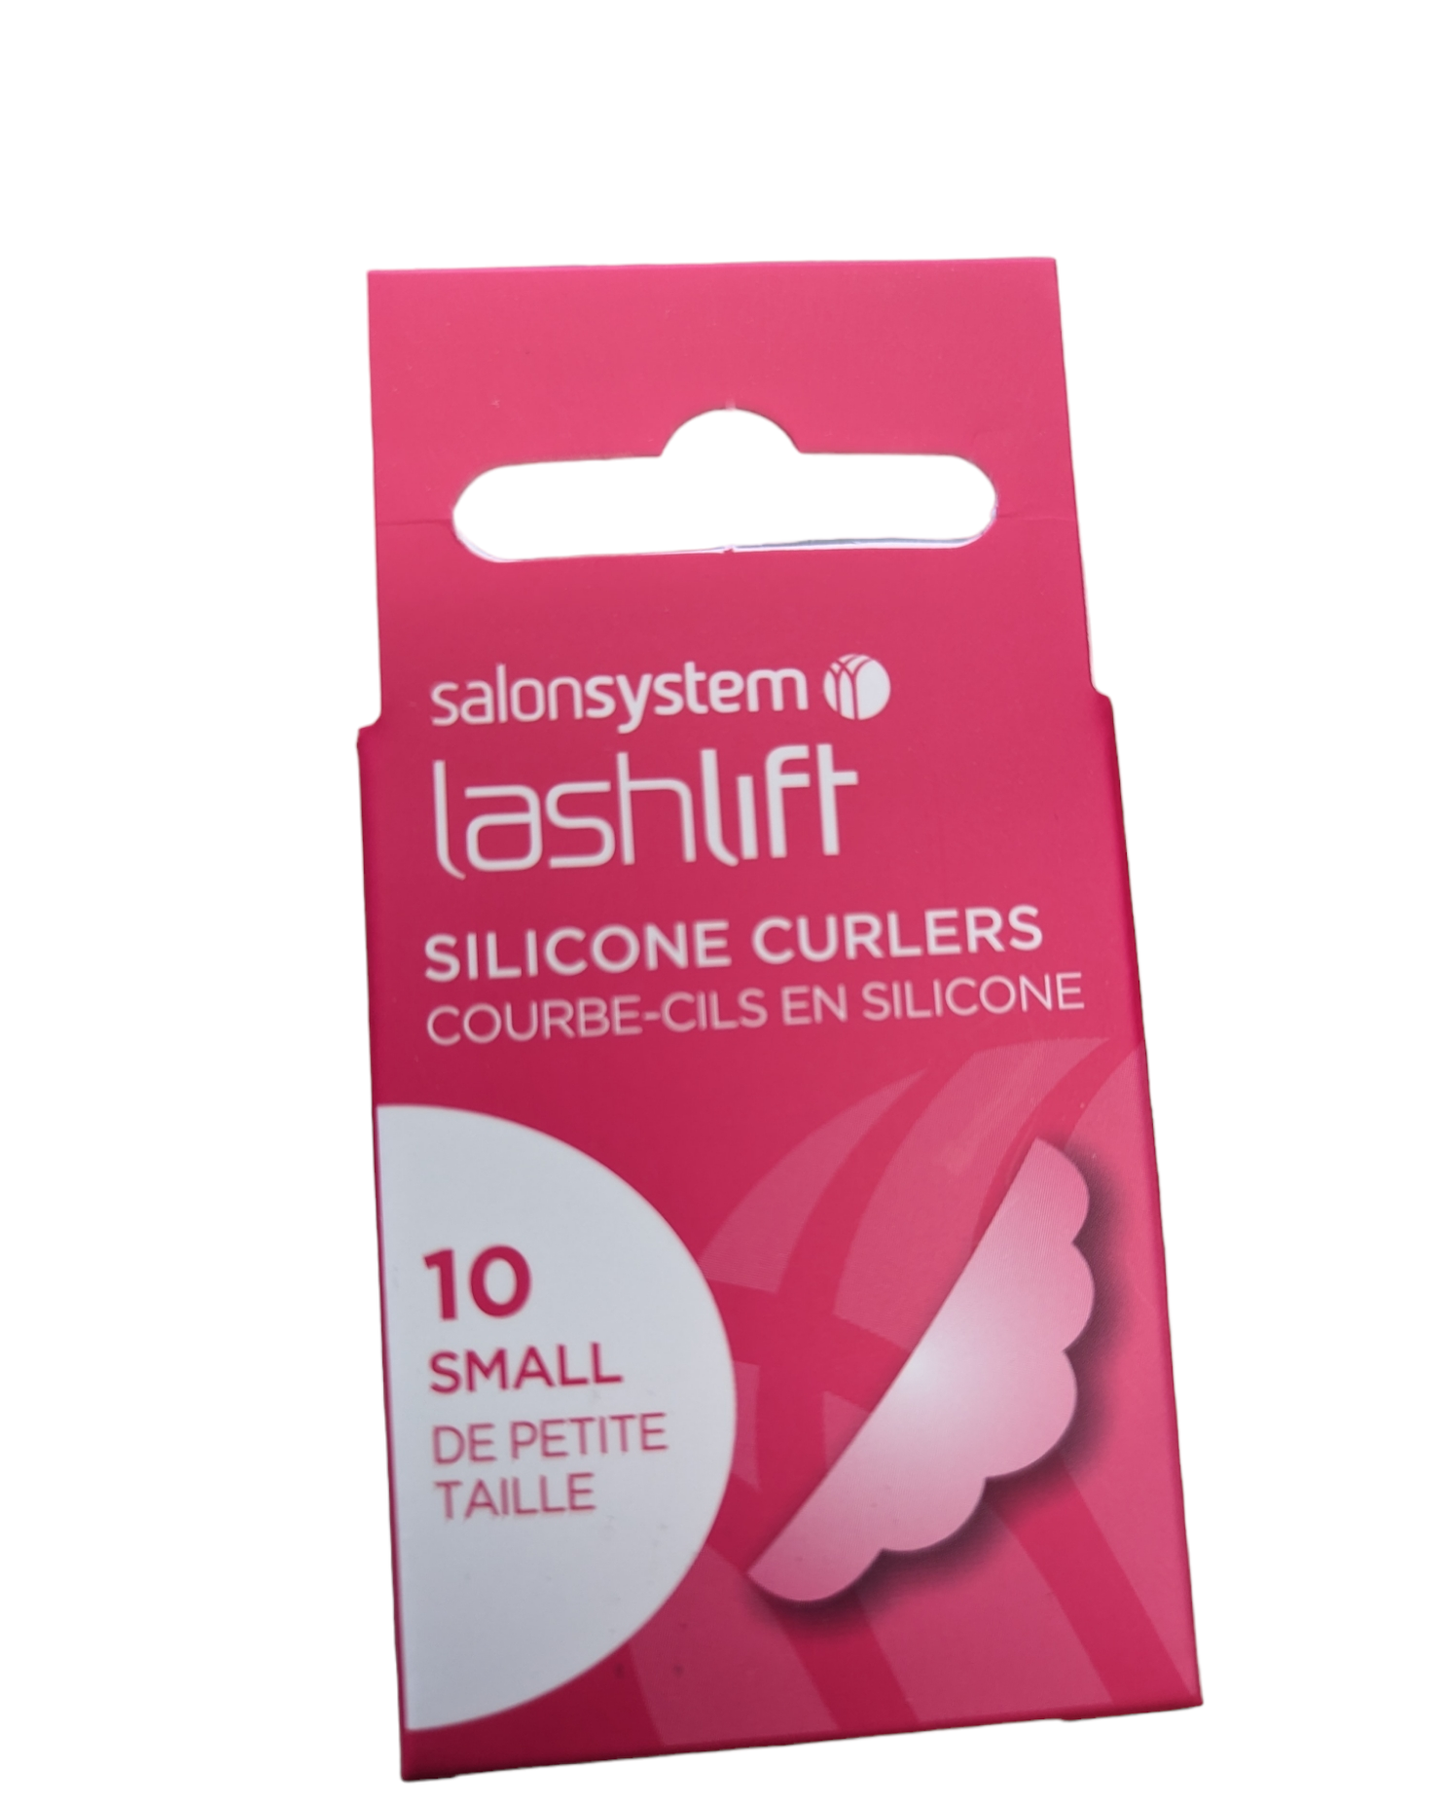 Salon System Lash Lift Silicone Curlers